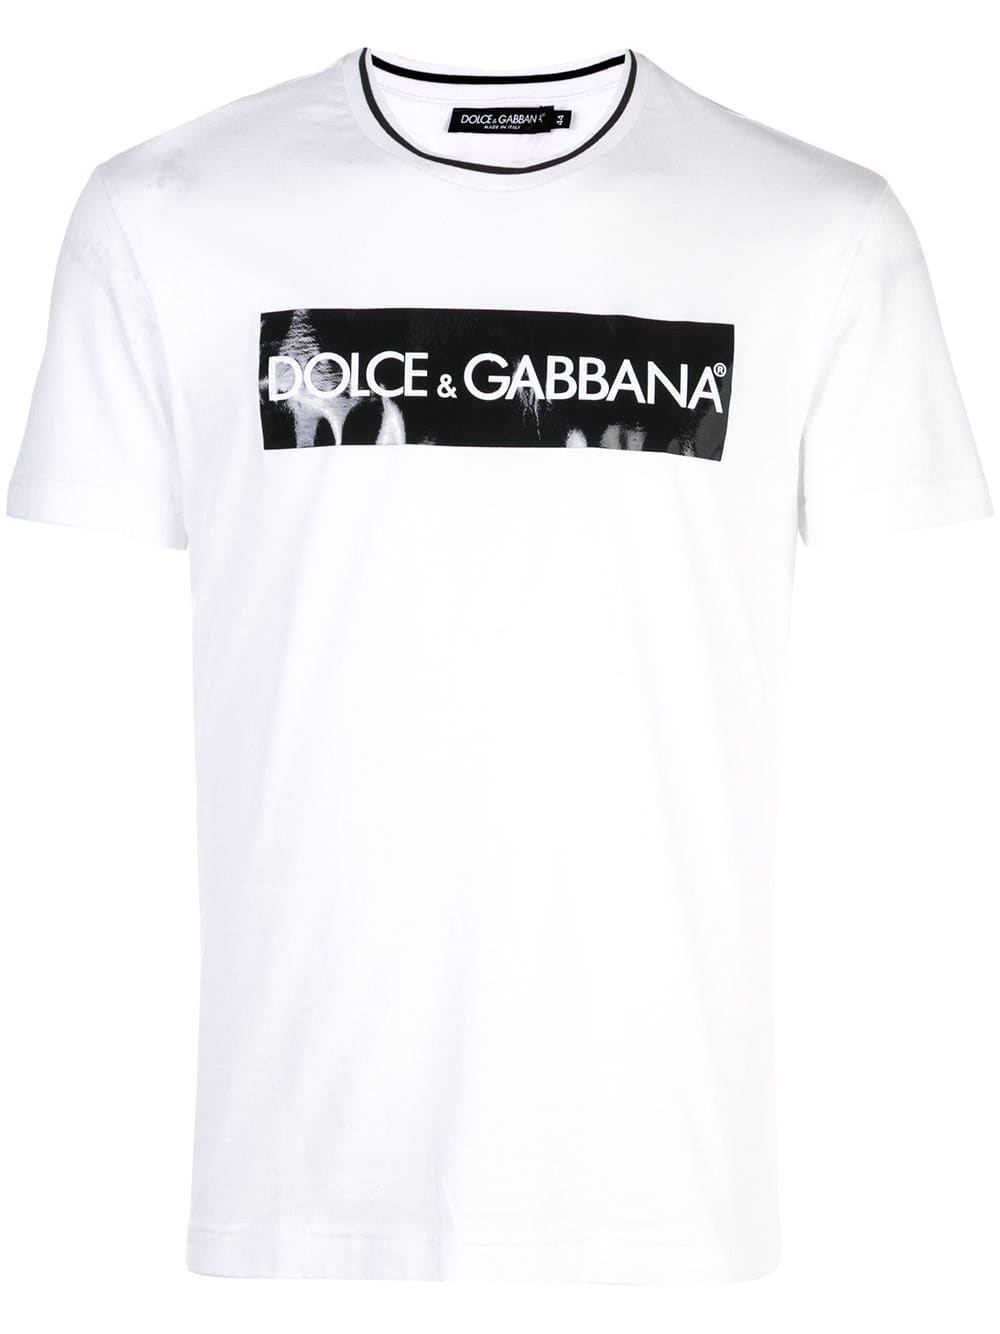 dolce and gabbana t shirts women's price